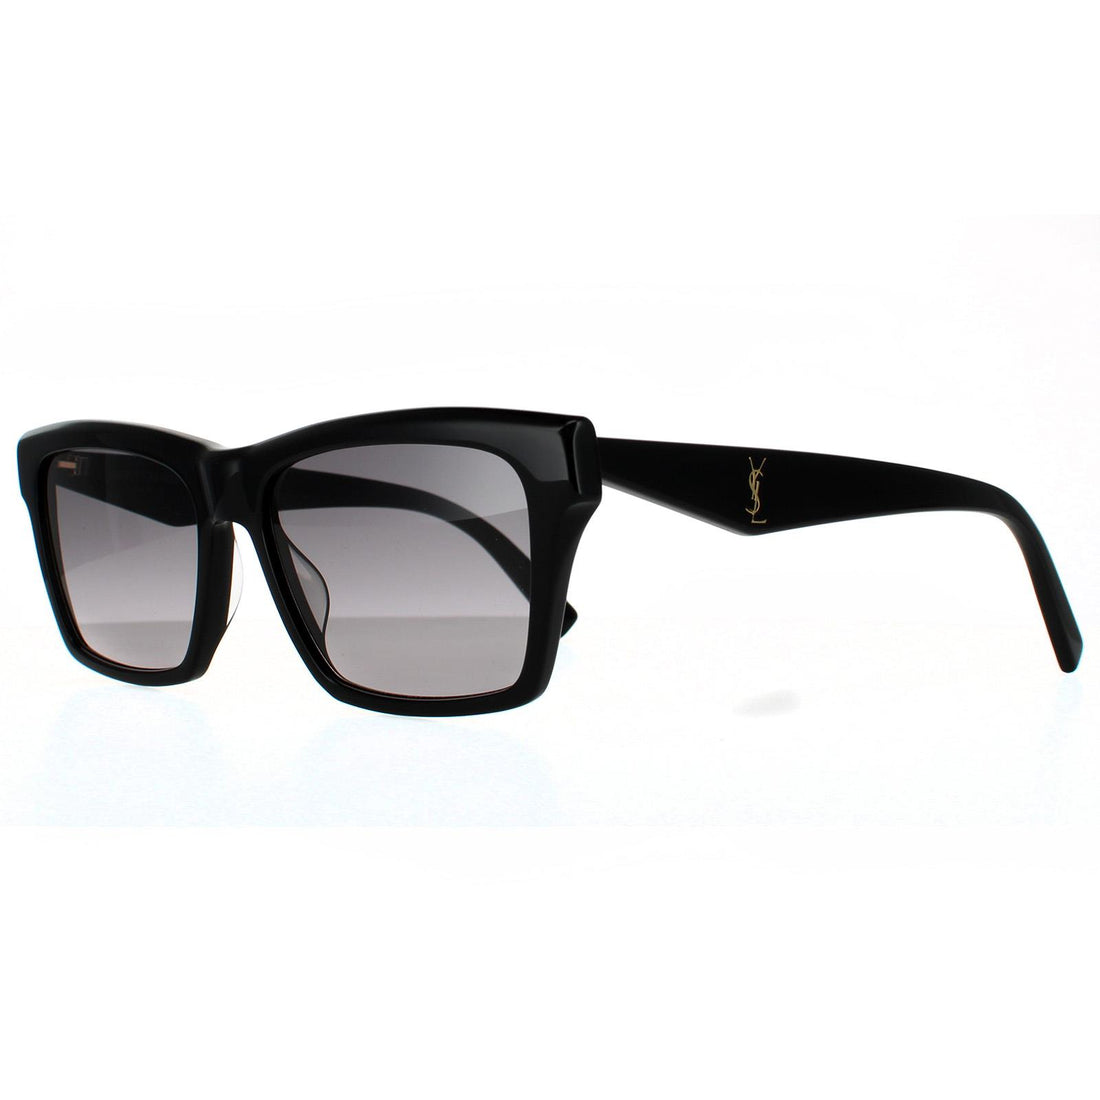 Saint Laurent Sunglasses SL M104 001 Shiny Black Grey Gradient